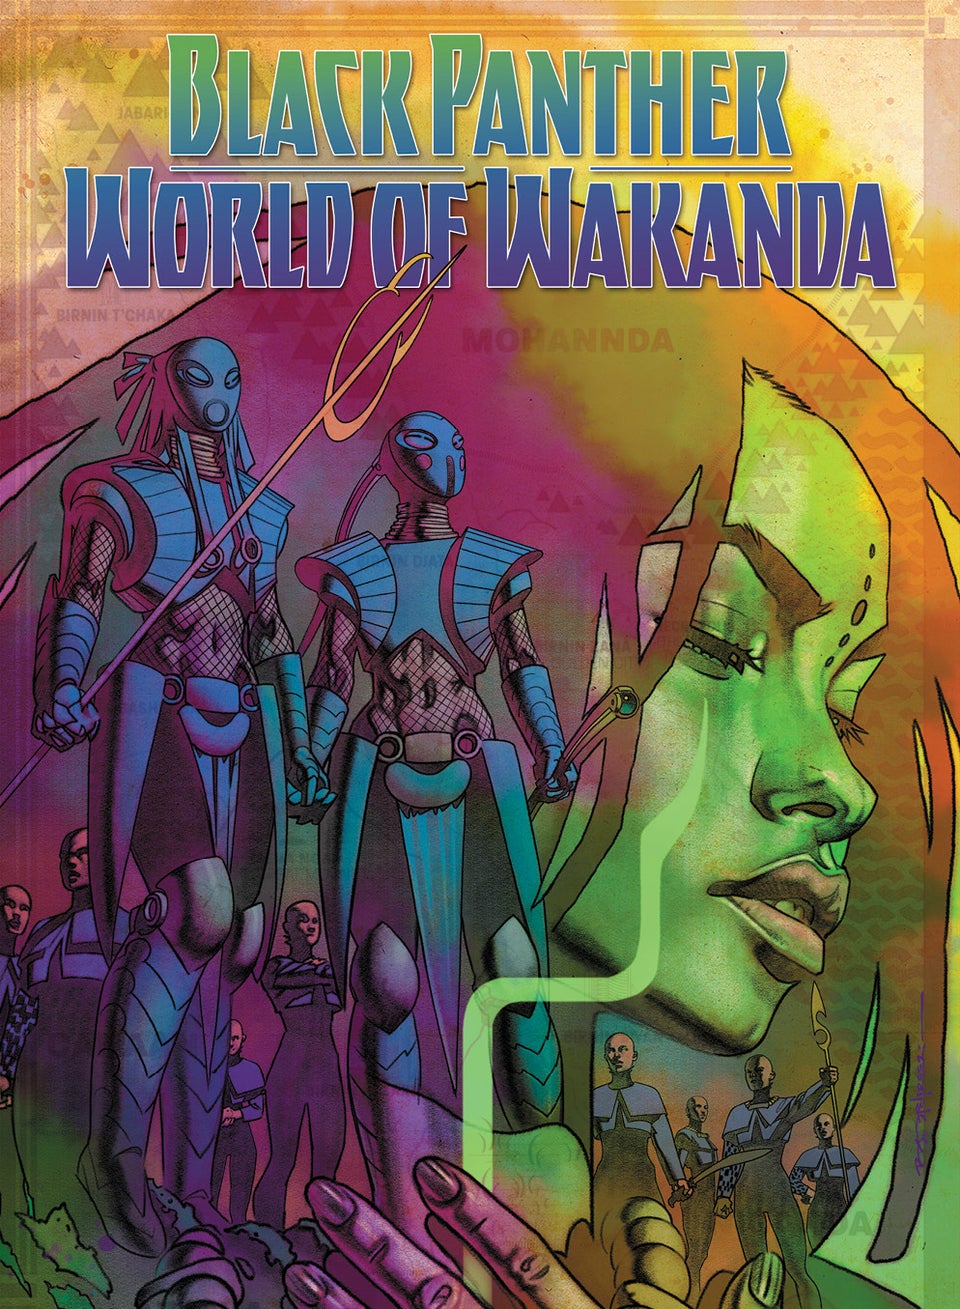 Roxane Gay And Yona Harvey Didn’t Hesitate To Take On The ‘World Of Wakanda’